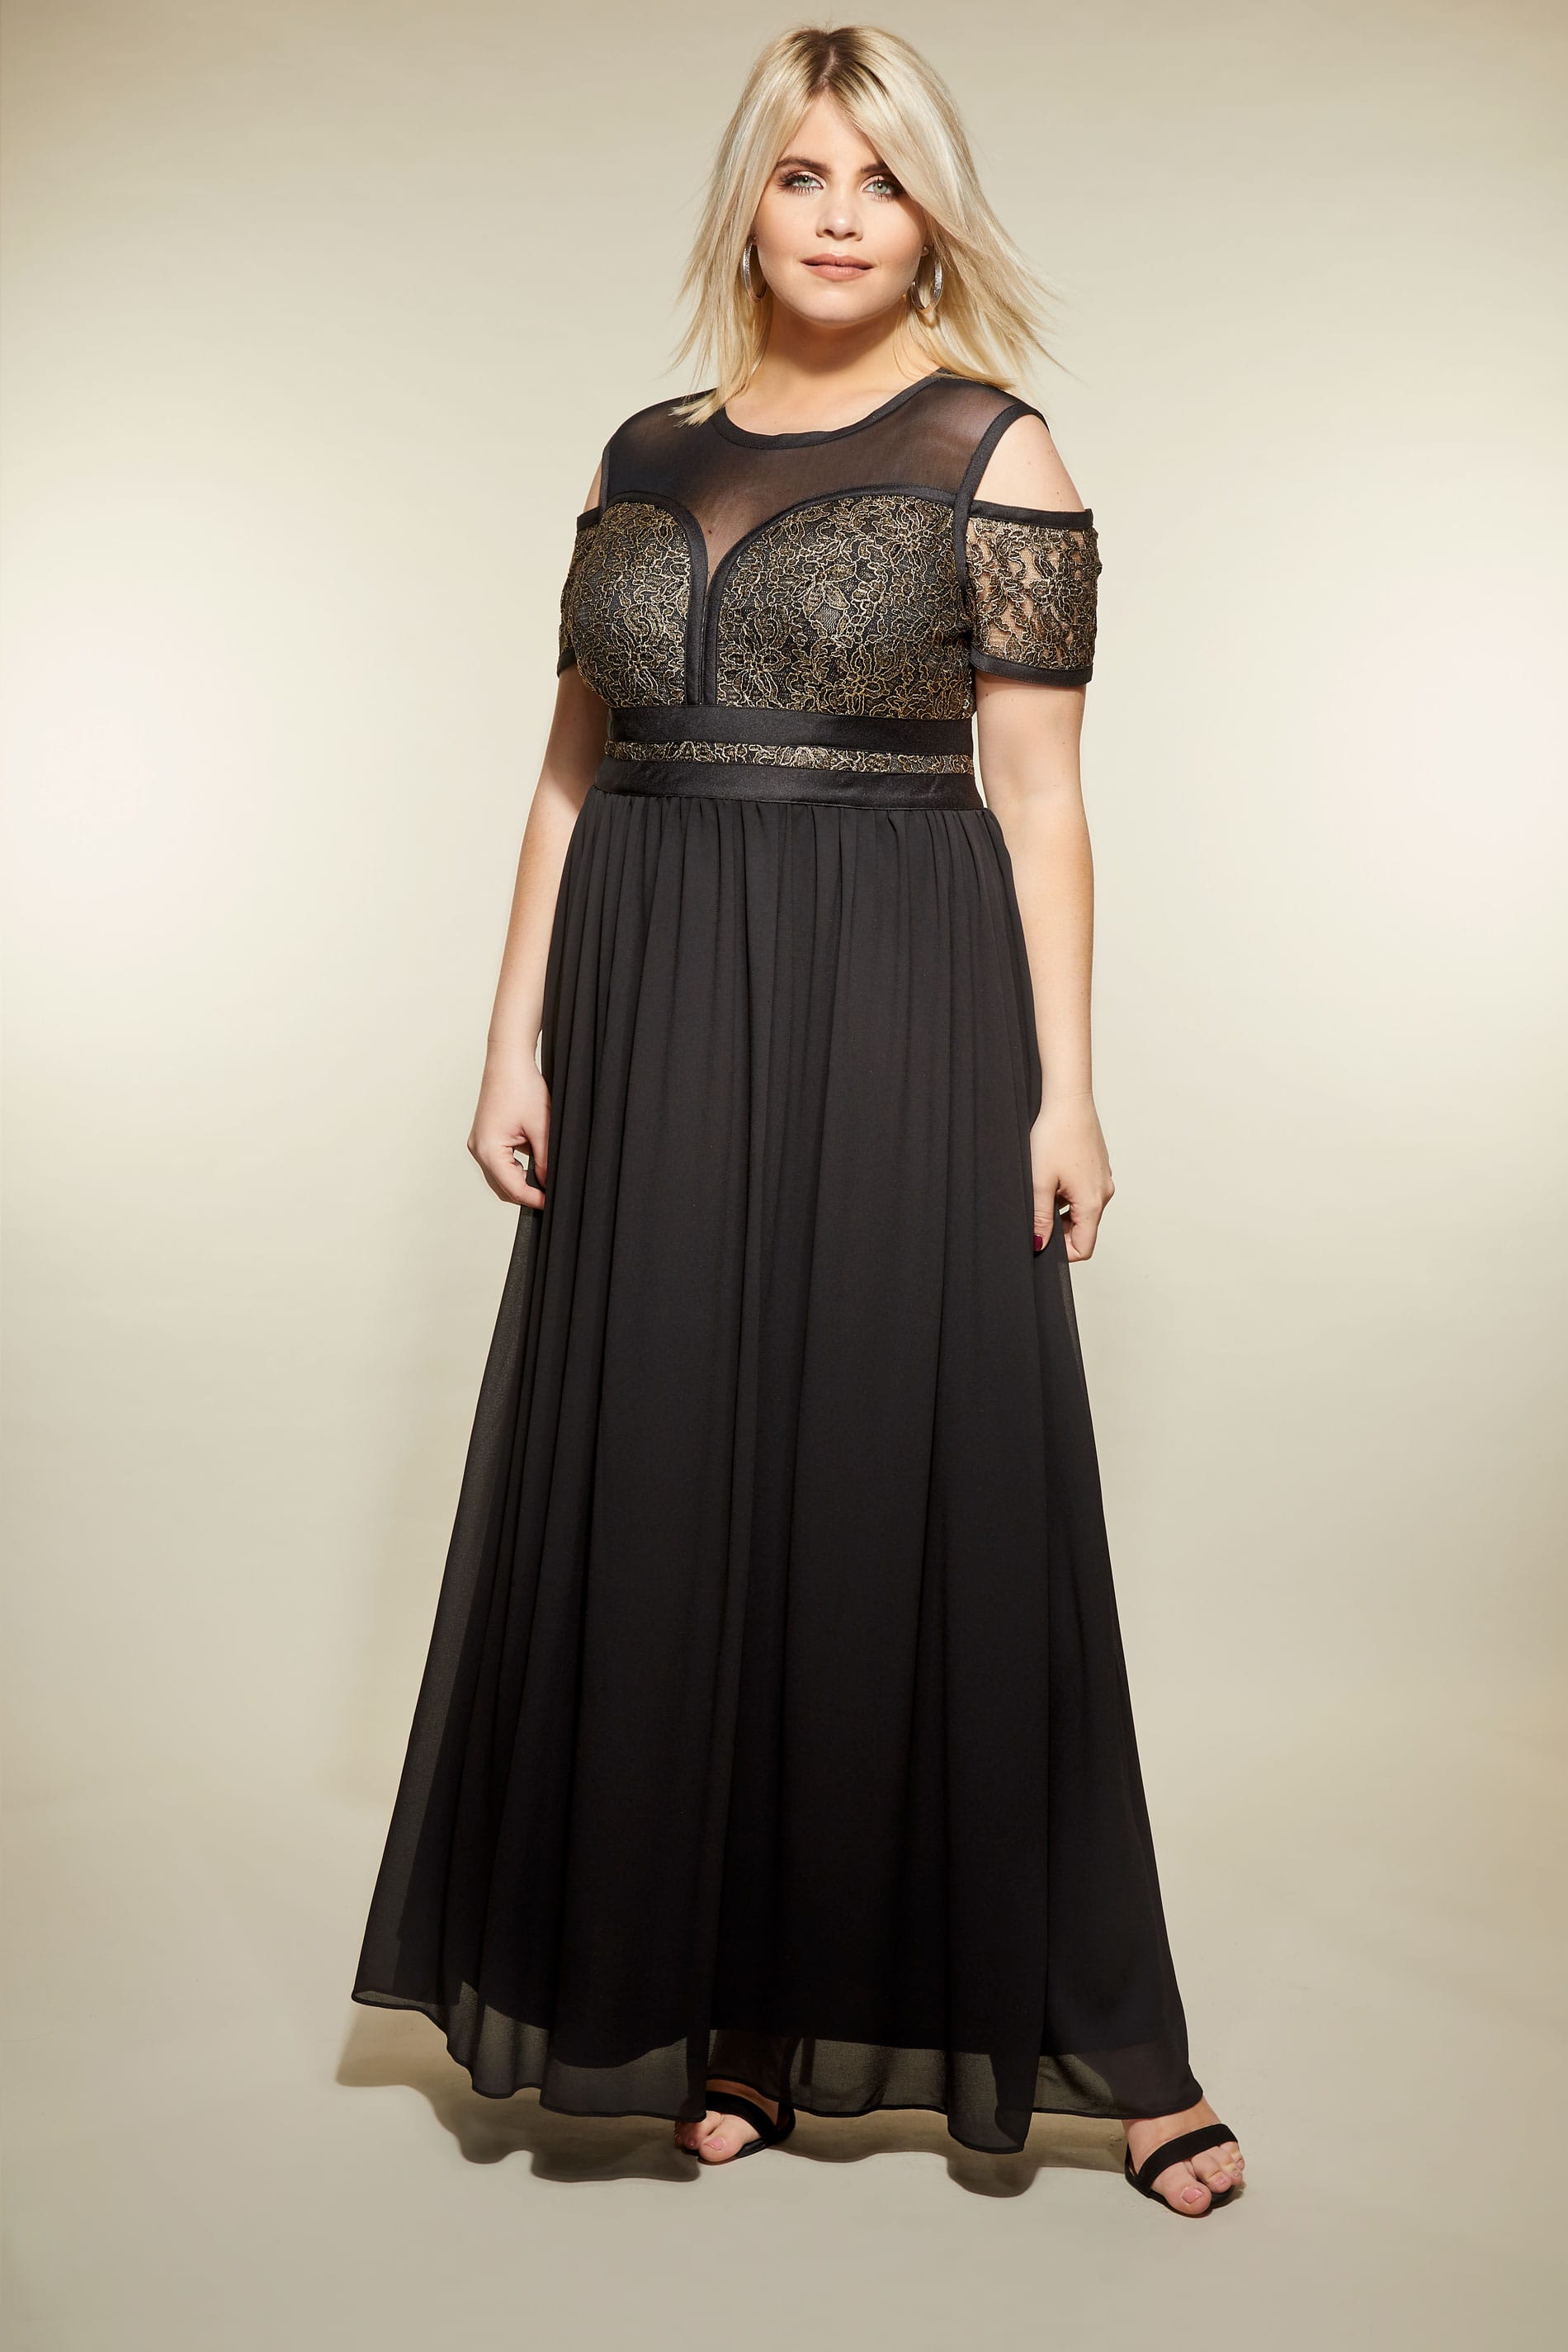 LOVEDROBE Black & Gold Lace & Mesh Maxi Dress, Plus size 16 to 32